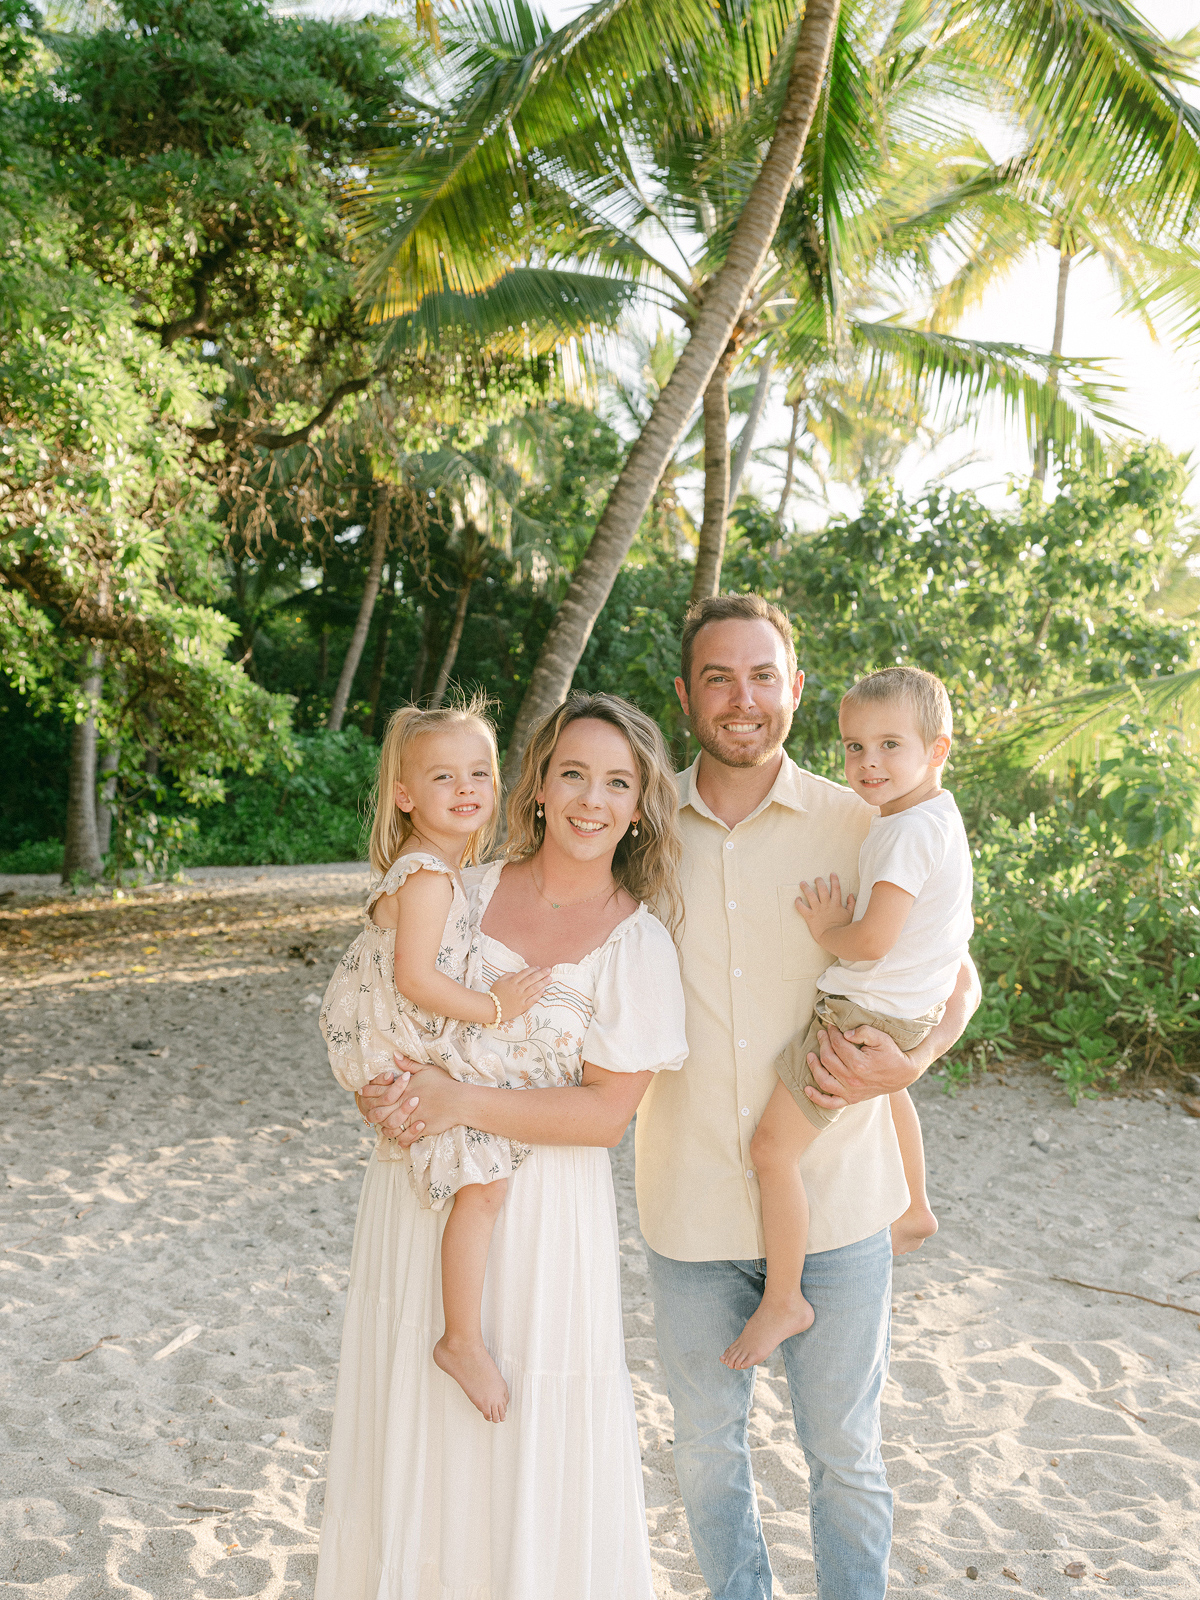 Big Island family photographer Laura Ivanova, captured the Hally family at Ke'ei Beach near Kona, Hawaii